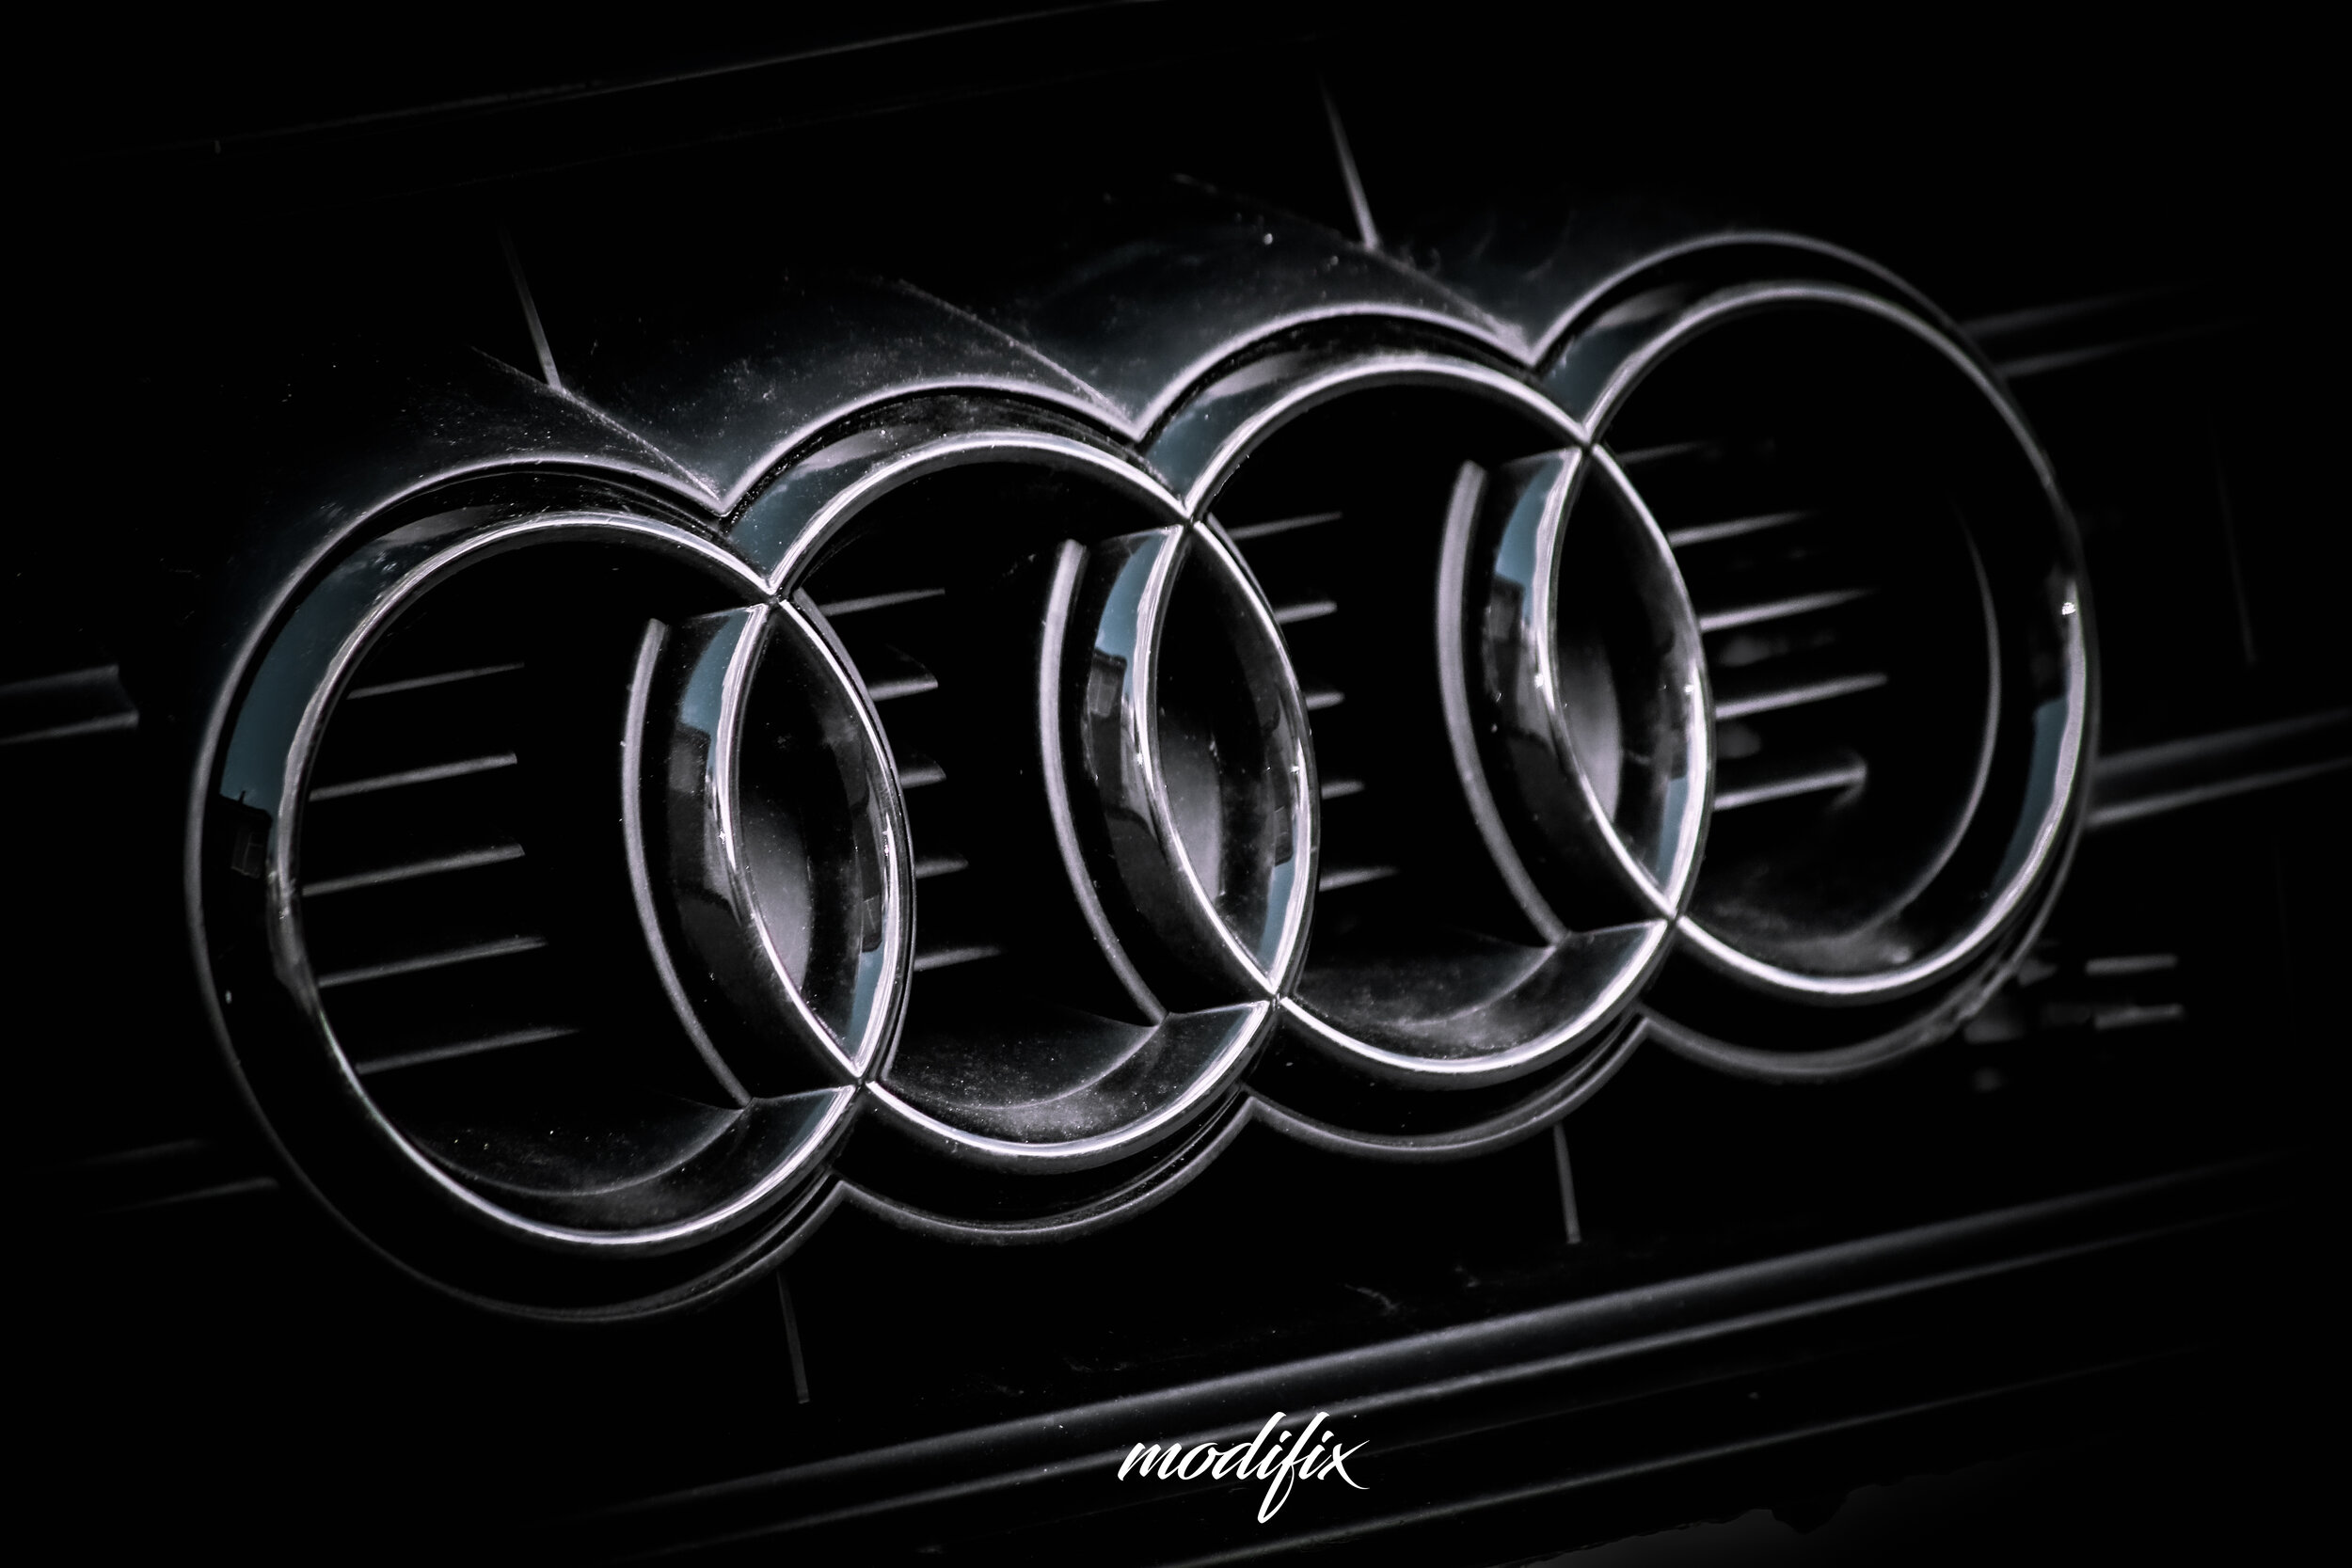 Audi Rings Badge Emblem Front Rear Black Gloss Or Matte For Audi A3 A4 A5 A6 A7 Black Edition S Line Rs Modifix